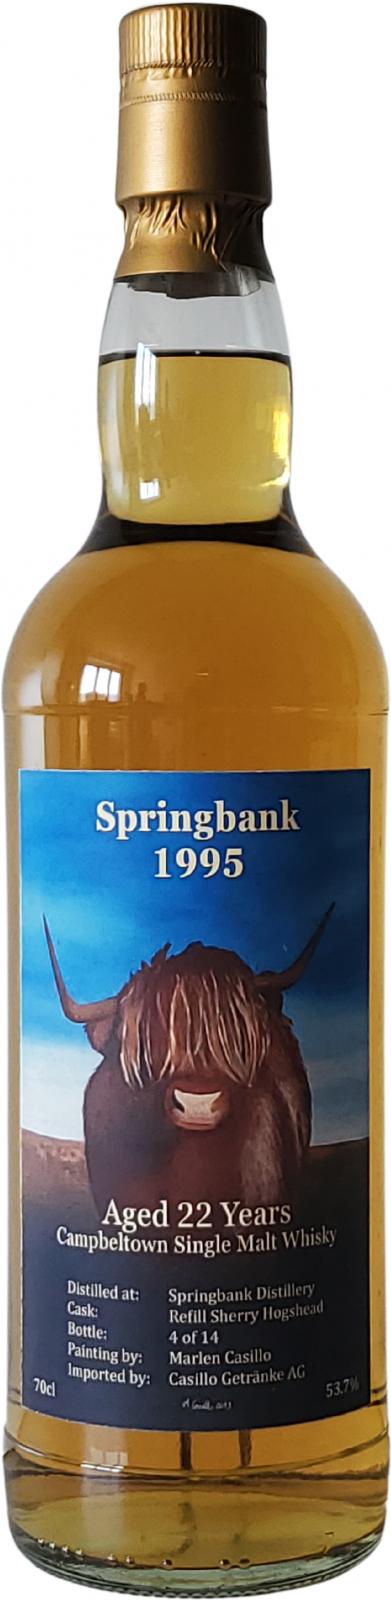 Springbank 1995 CG Refill Sherry Hogshead 53.7% 700ml